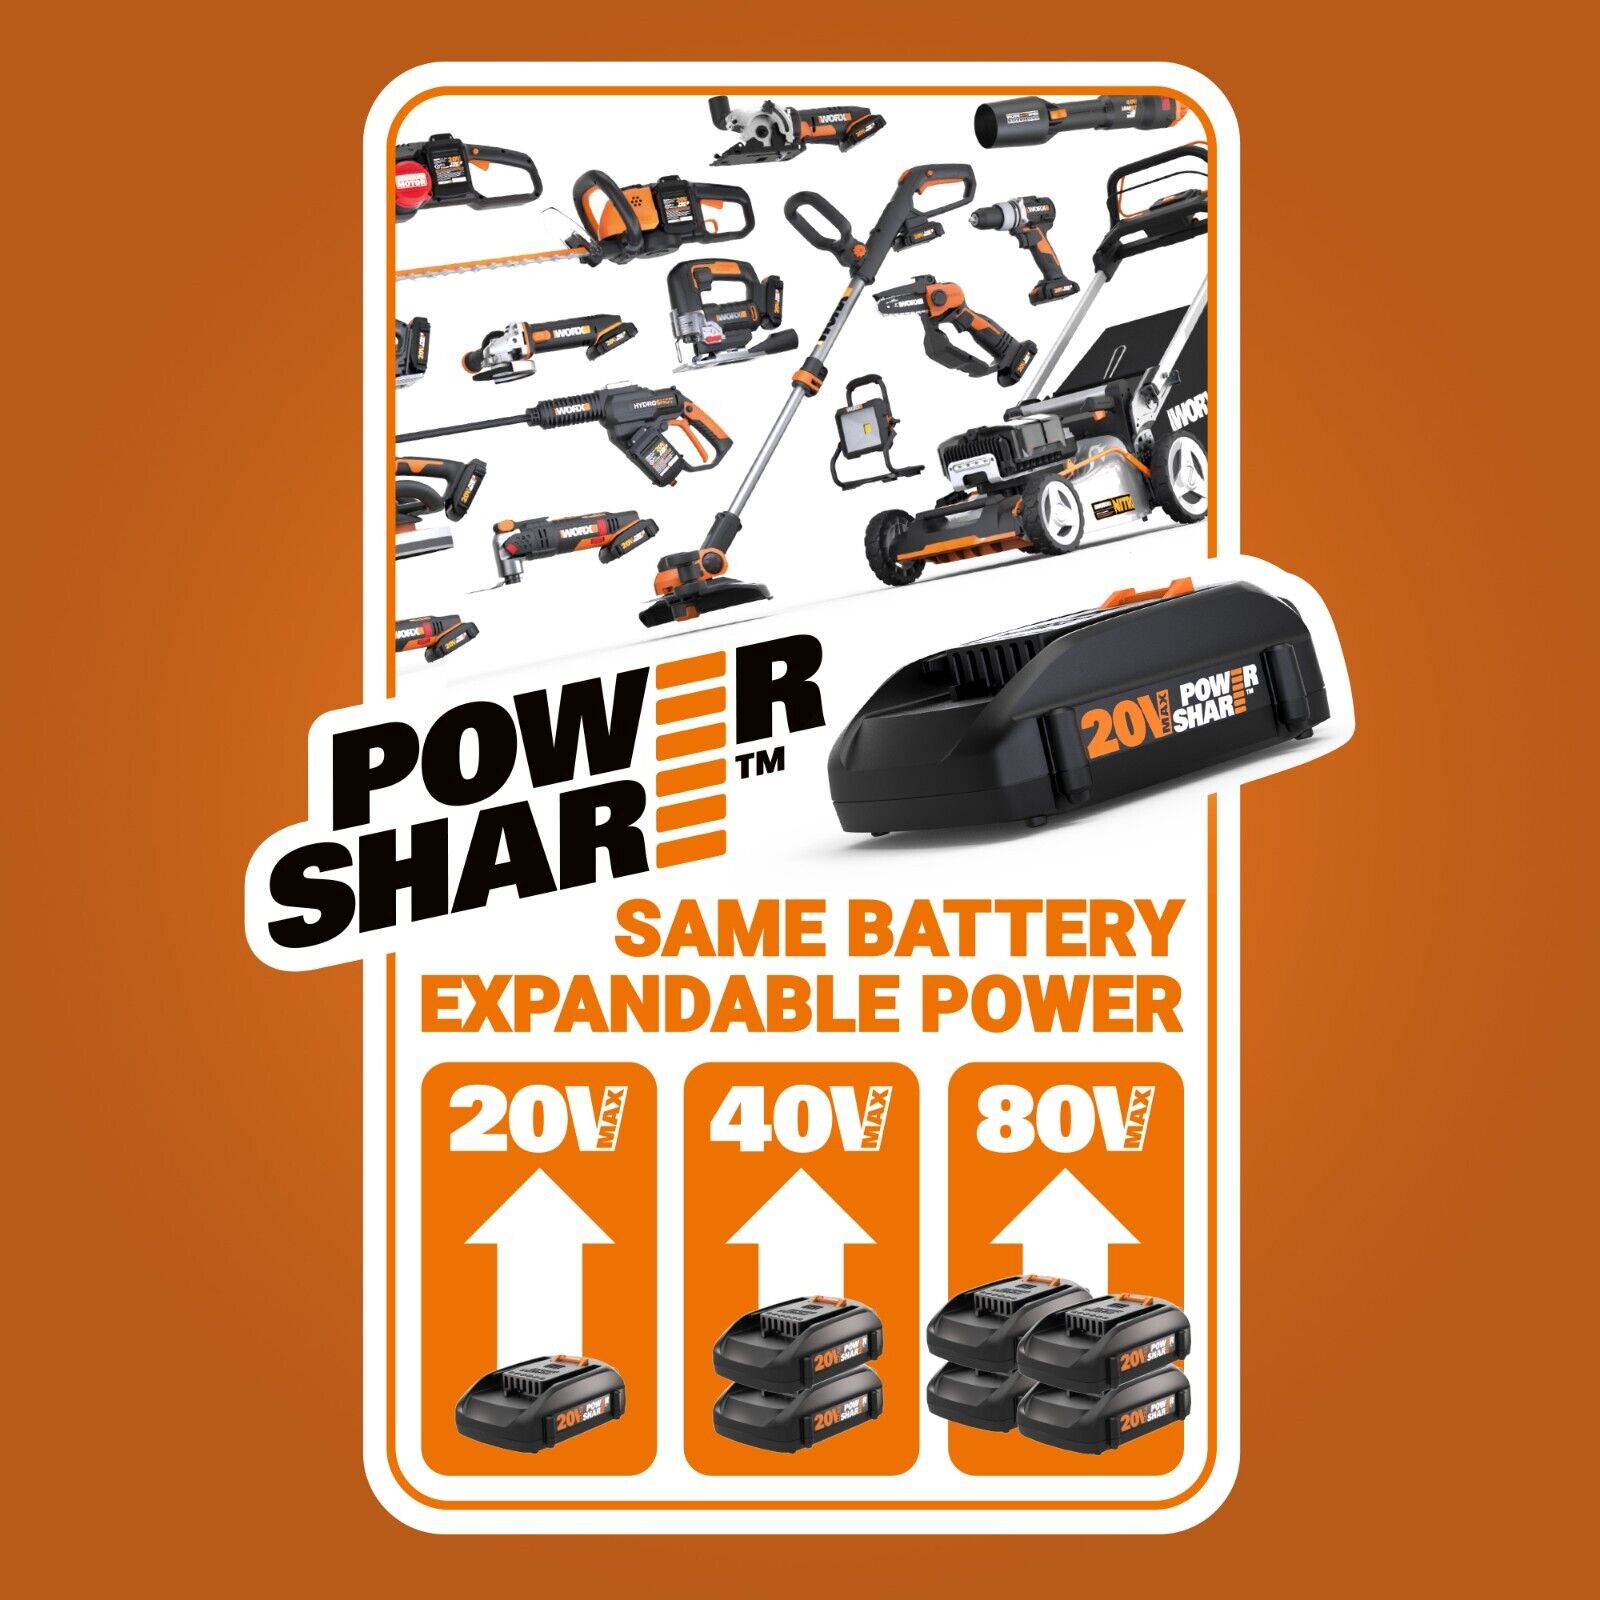 Worx WG261 20 Volt Power Share Cordless Battery 22 Inch Hedge Trimmer, Orange - image 2 of 8